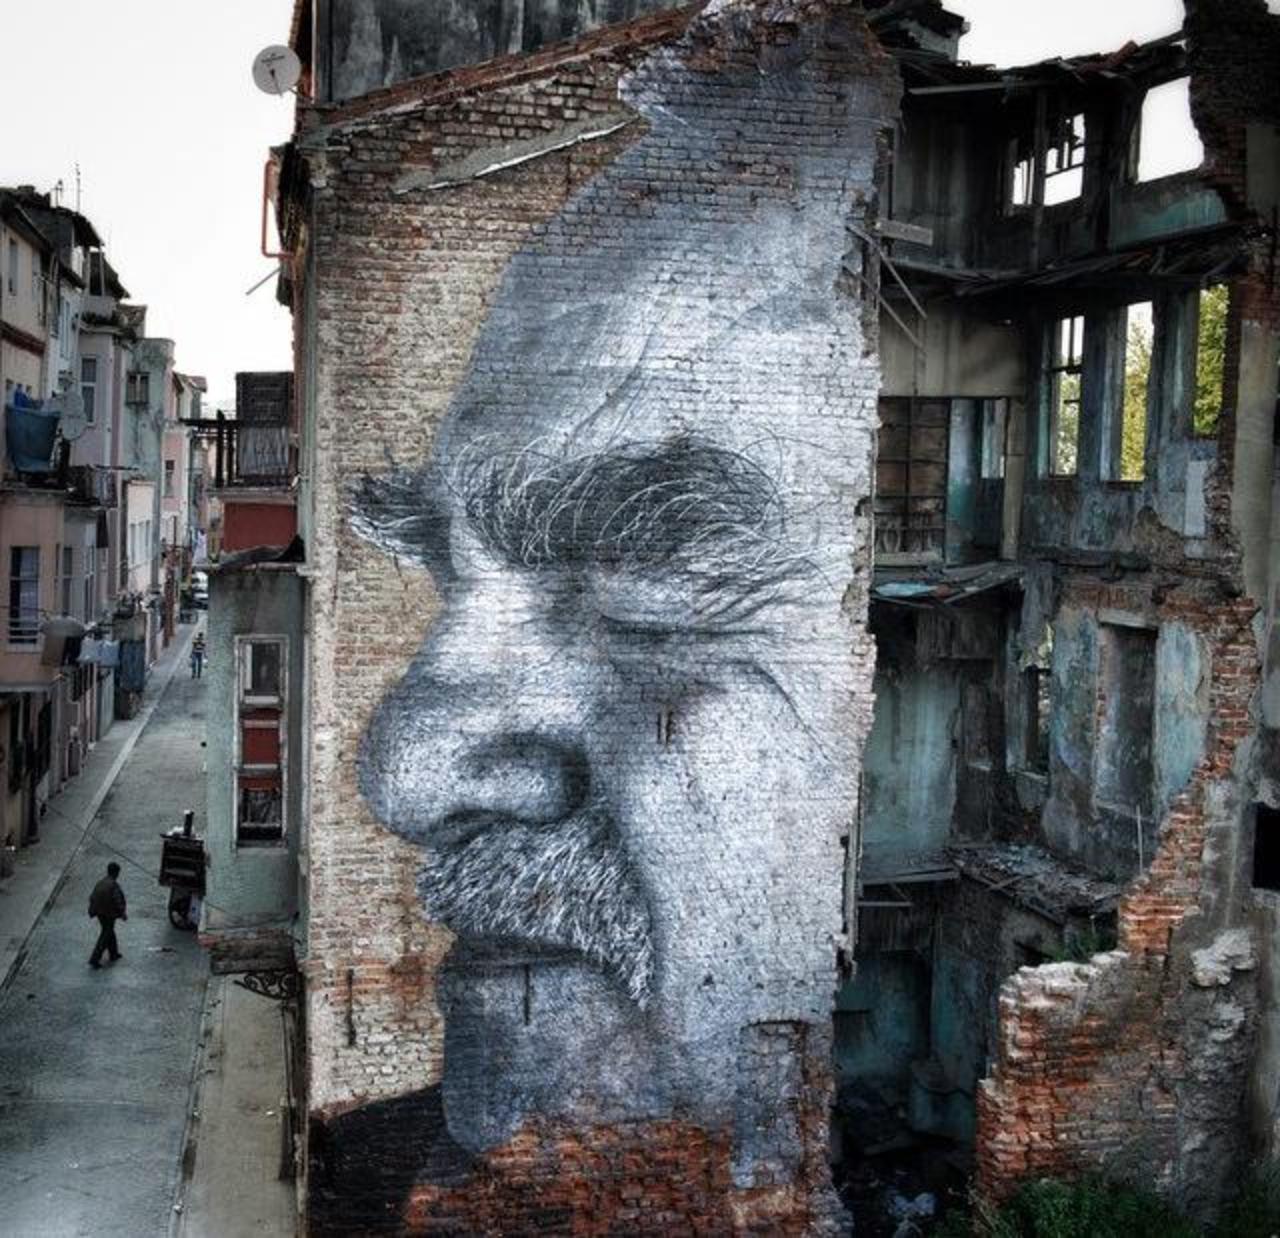 Street Art by JR in Istanbul & after local police painted over it 

#art #arte #graffiti #streetart http://t.co/FNfTKcSzEl